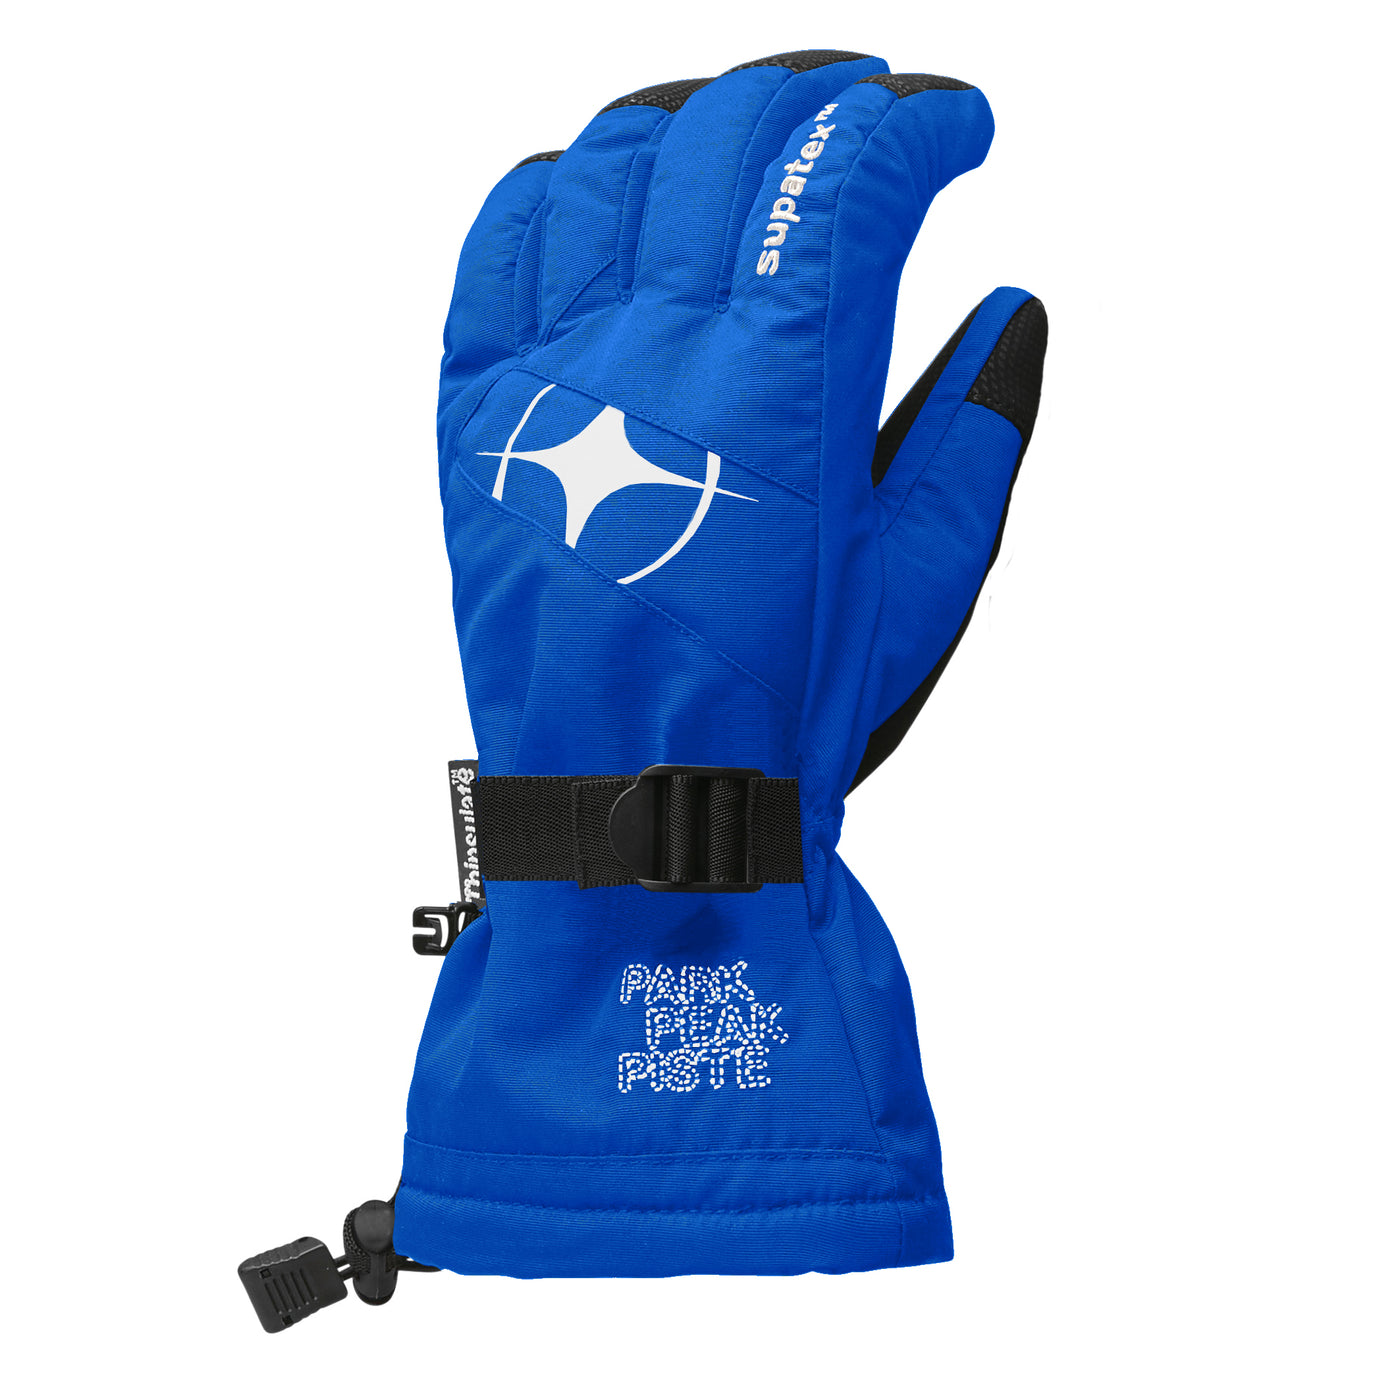 Manbi-PPP Kids Epic Glove Olympic Blue